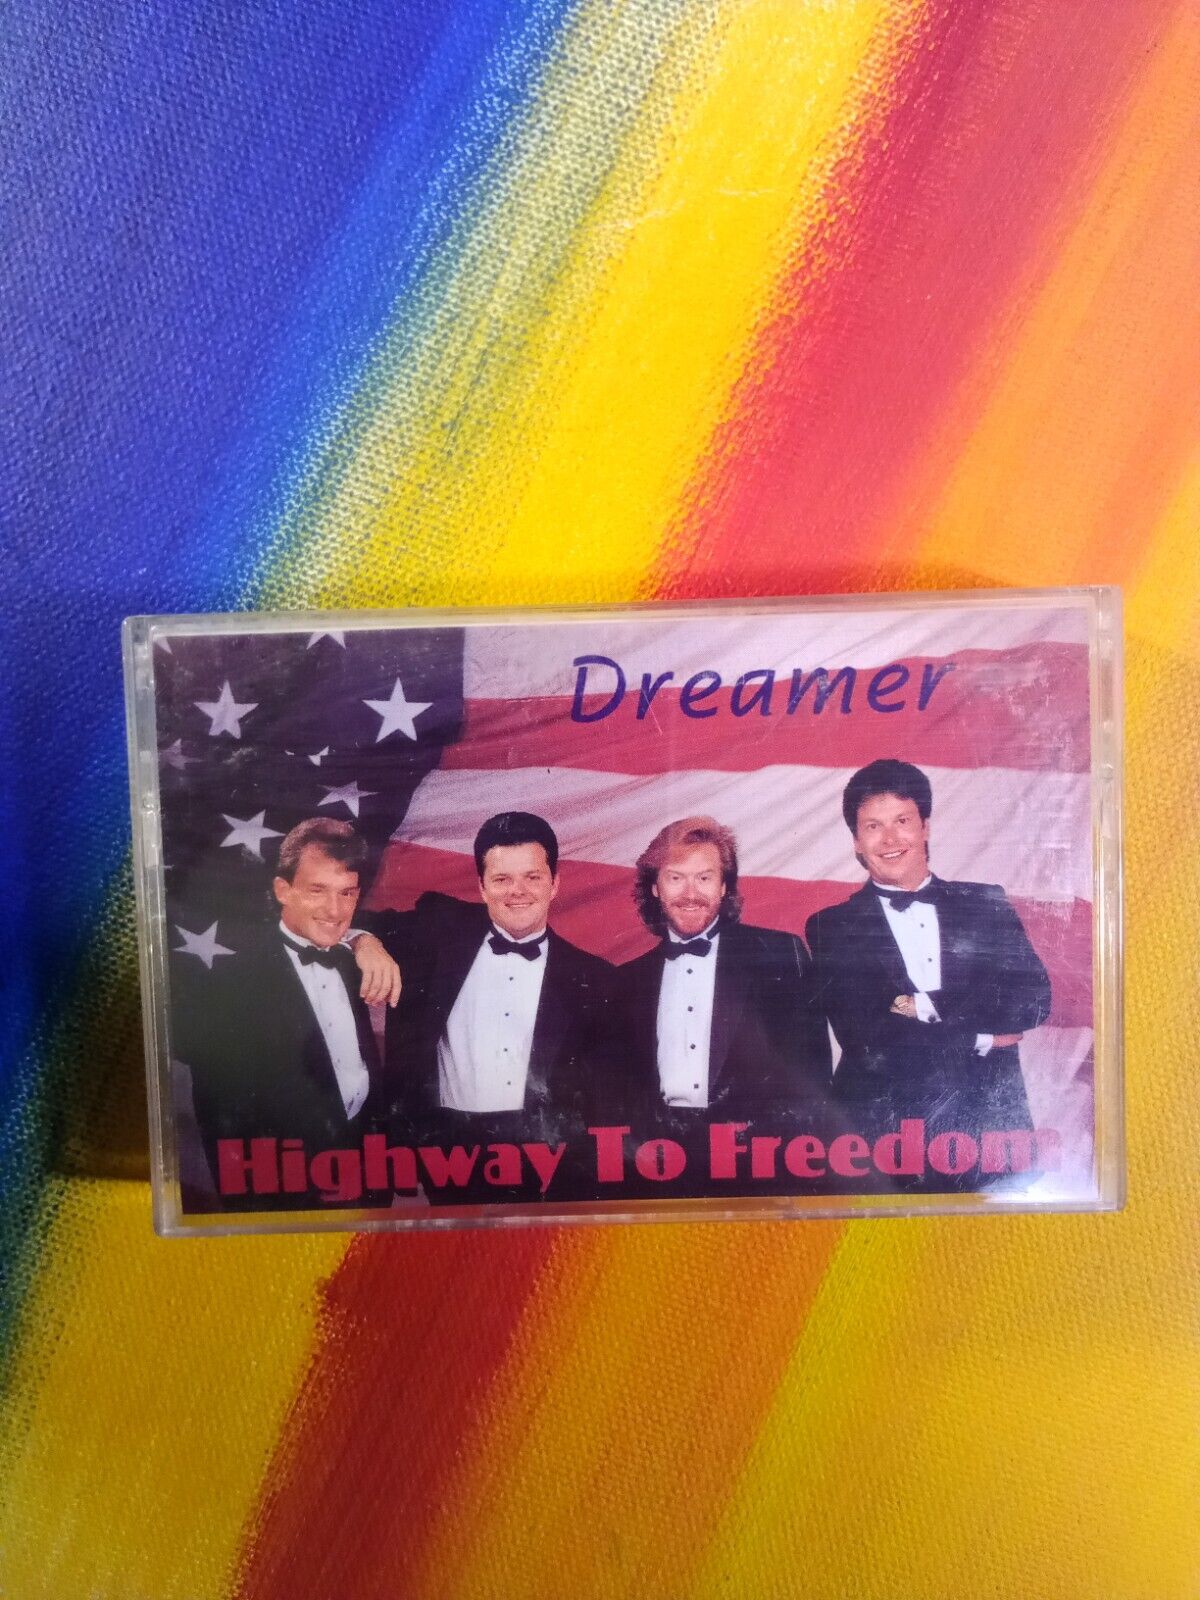 Highway to Freedom Dreamer Plano Texas Uplifting Album Cassette Tape